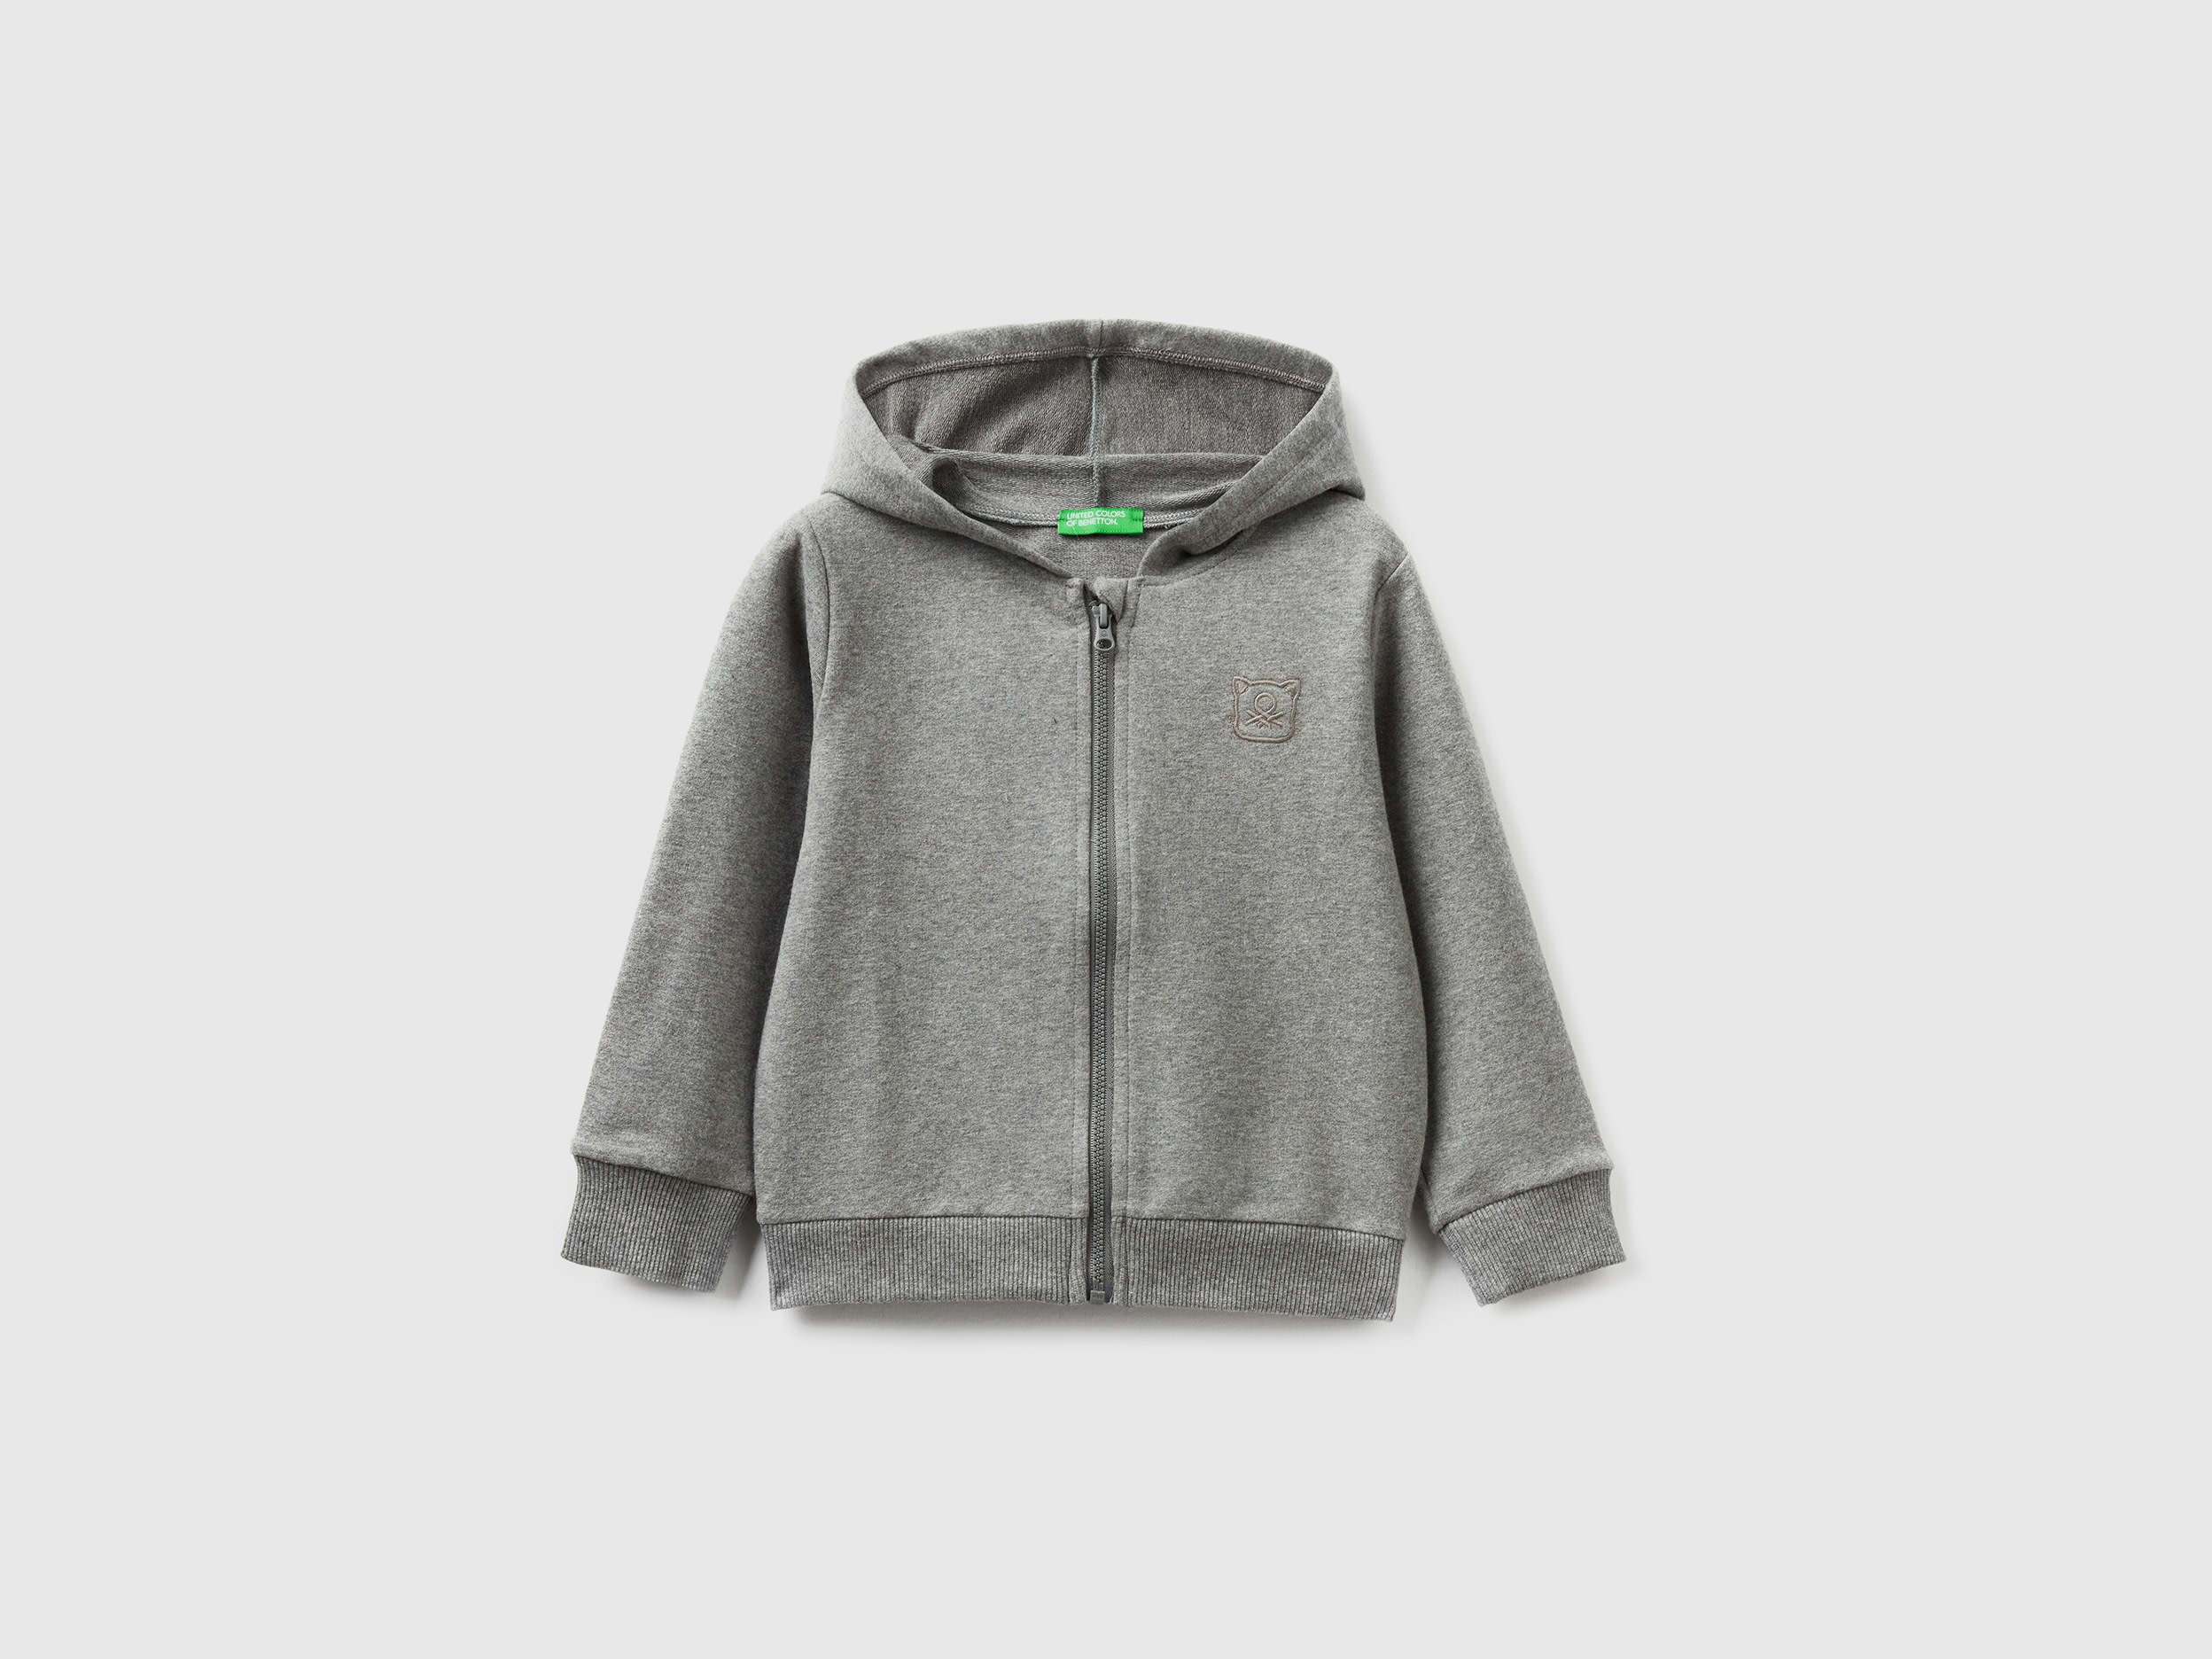 Benetton, Warm Sweatshirt With Zip And Embroidered Logo, size 12-18, Dark Gray, Kids